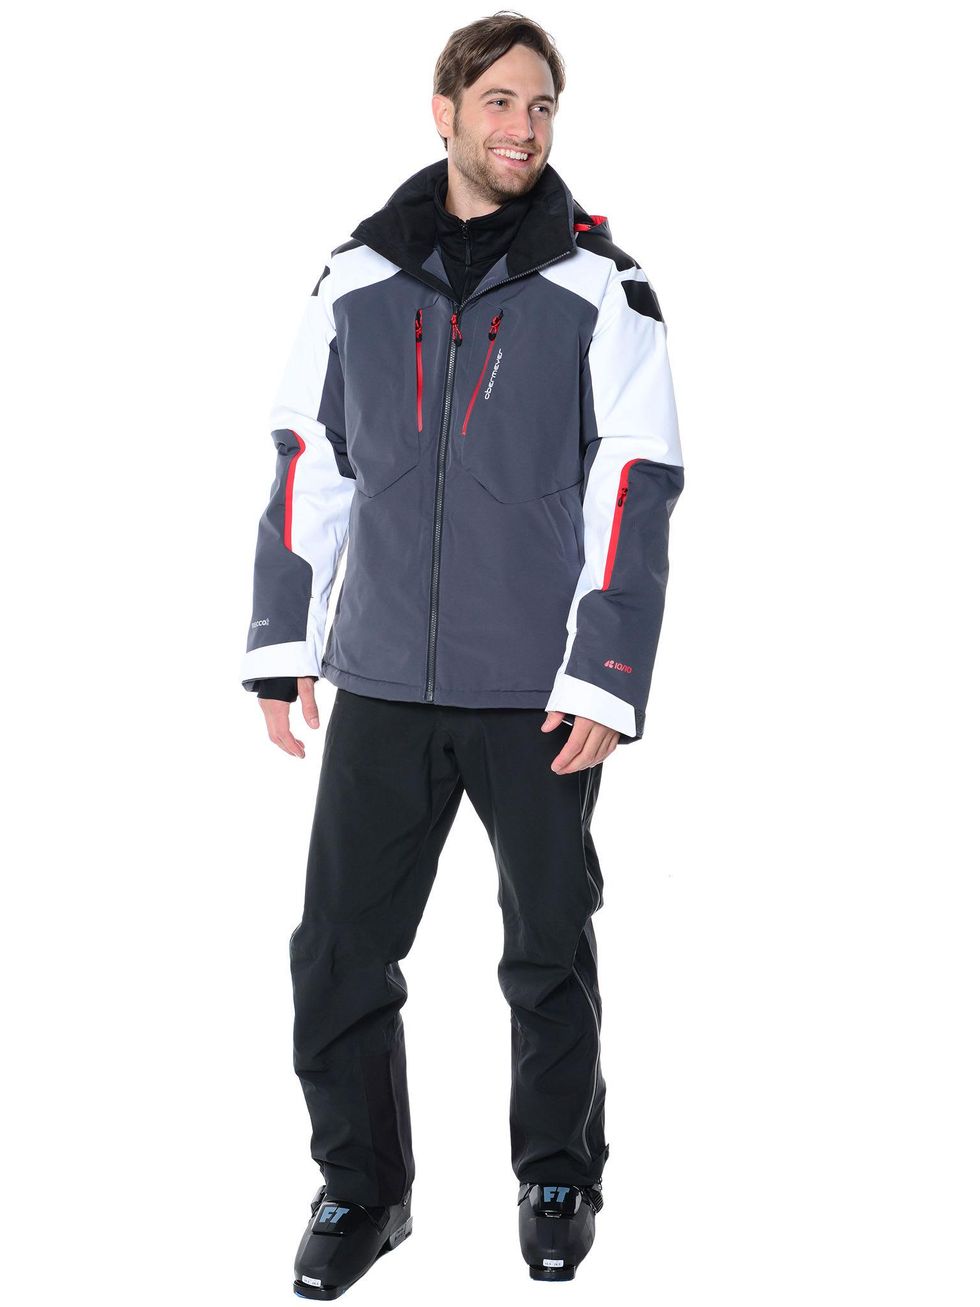 Obermeyer Men\u2019s Endurance jacket and Peak ski pants